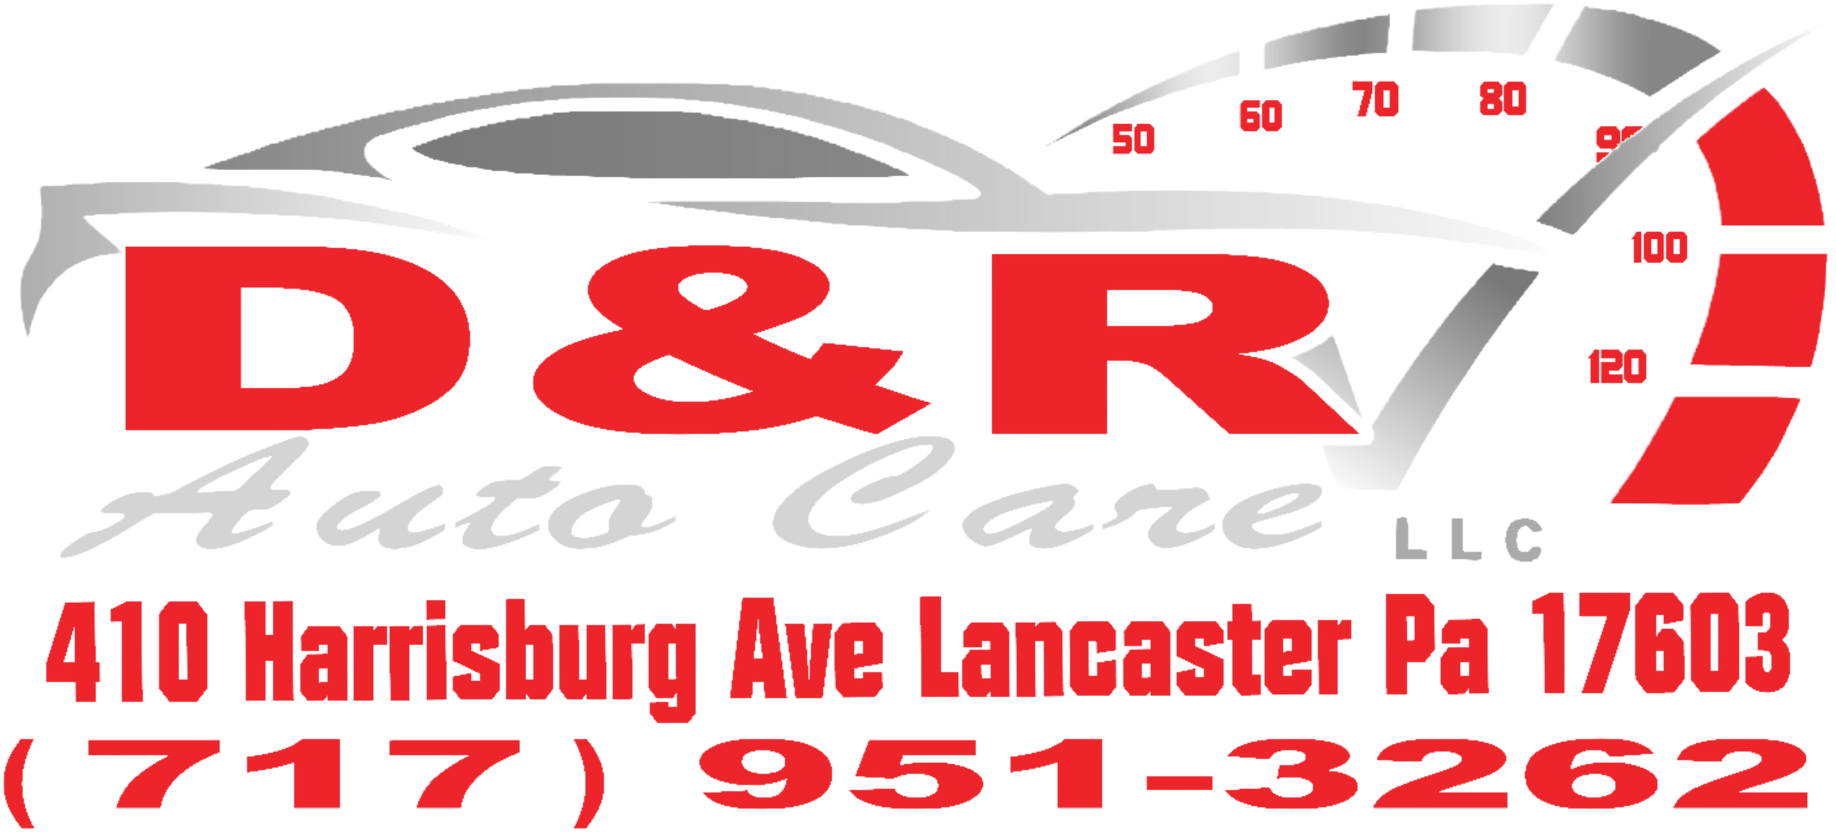 D&R Auto Care LLC Logo